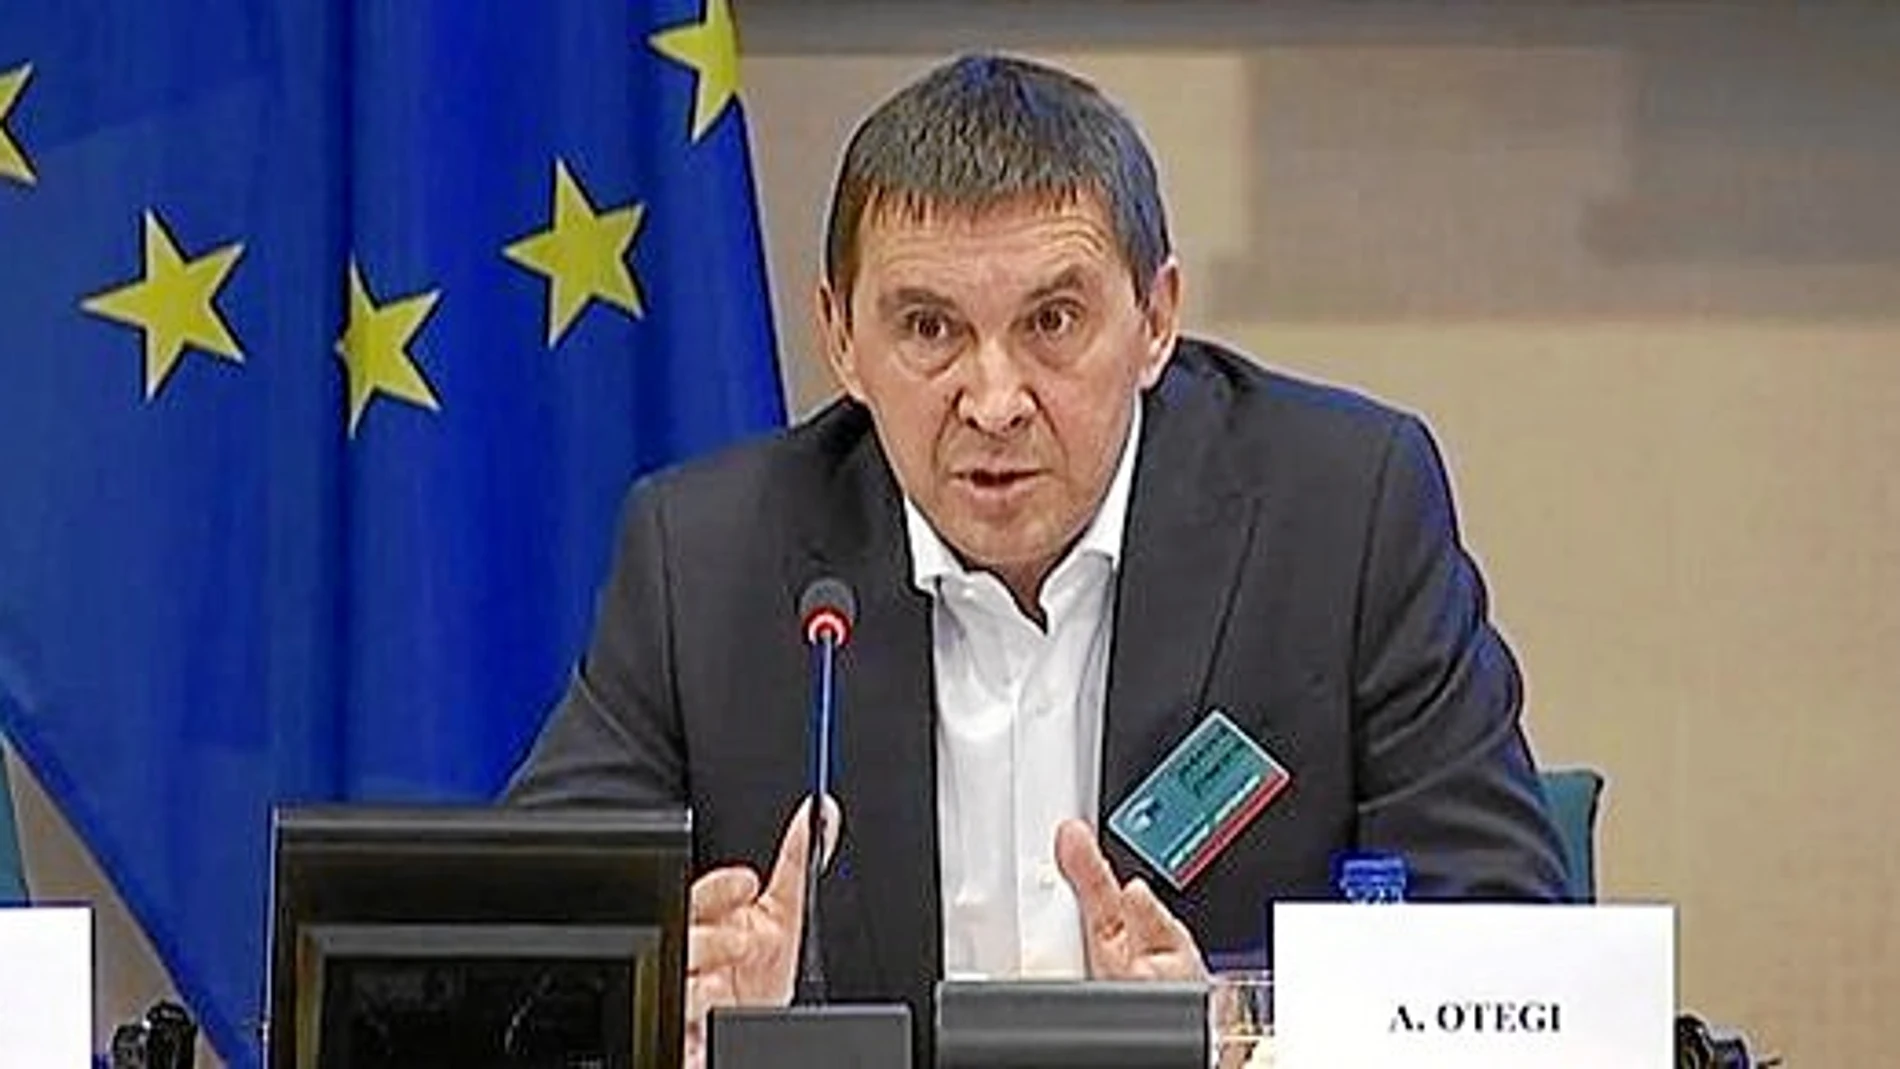 Arnaldo Otegi intervino en el Parlamento Europeo invitado por Podemos e Izquierda Unida.